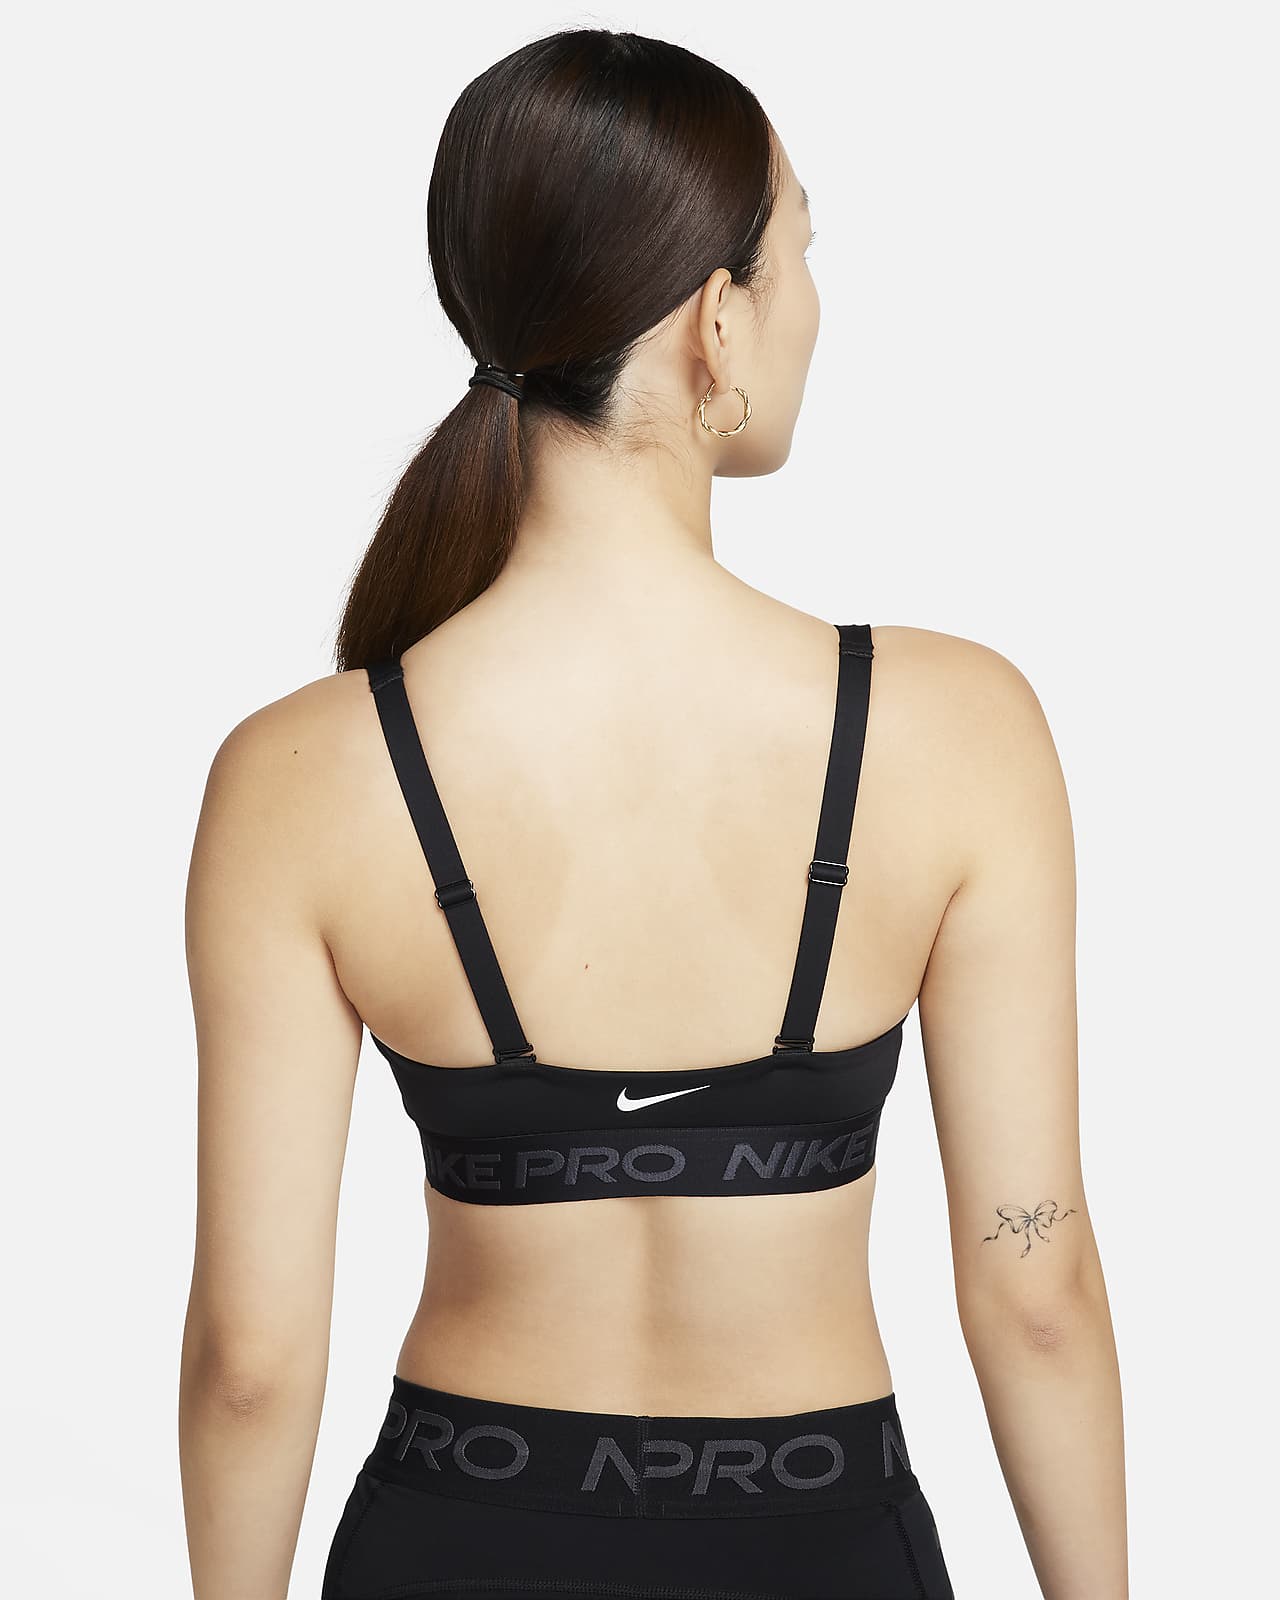 Nike Women's Pro Padded Sports Bra, Black, Medium